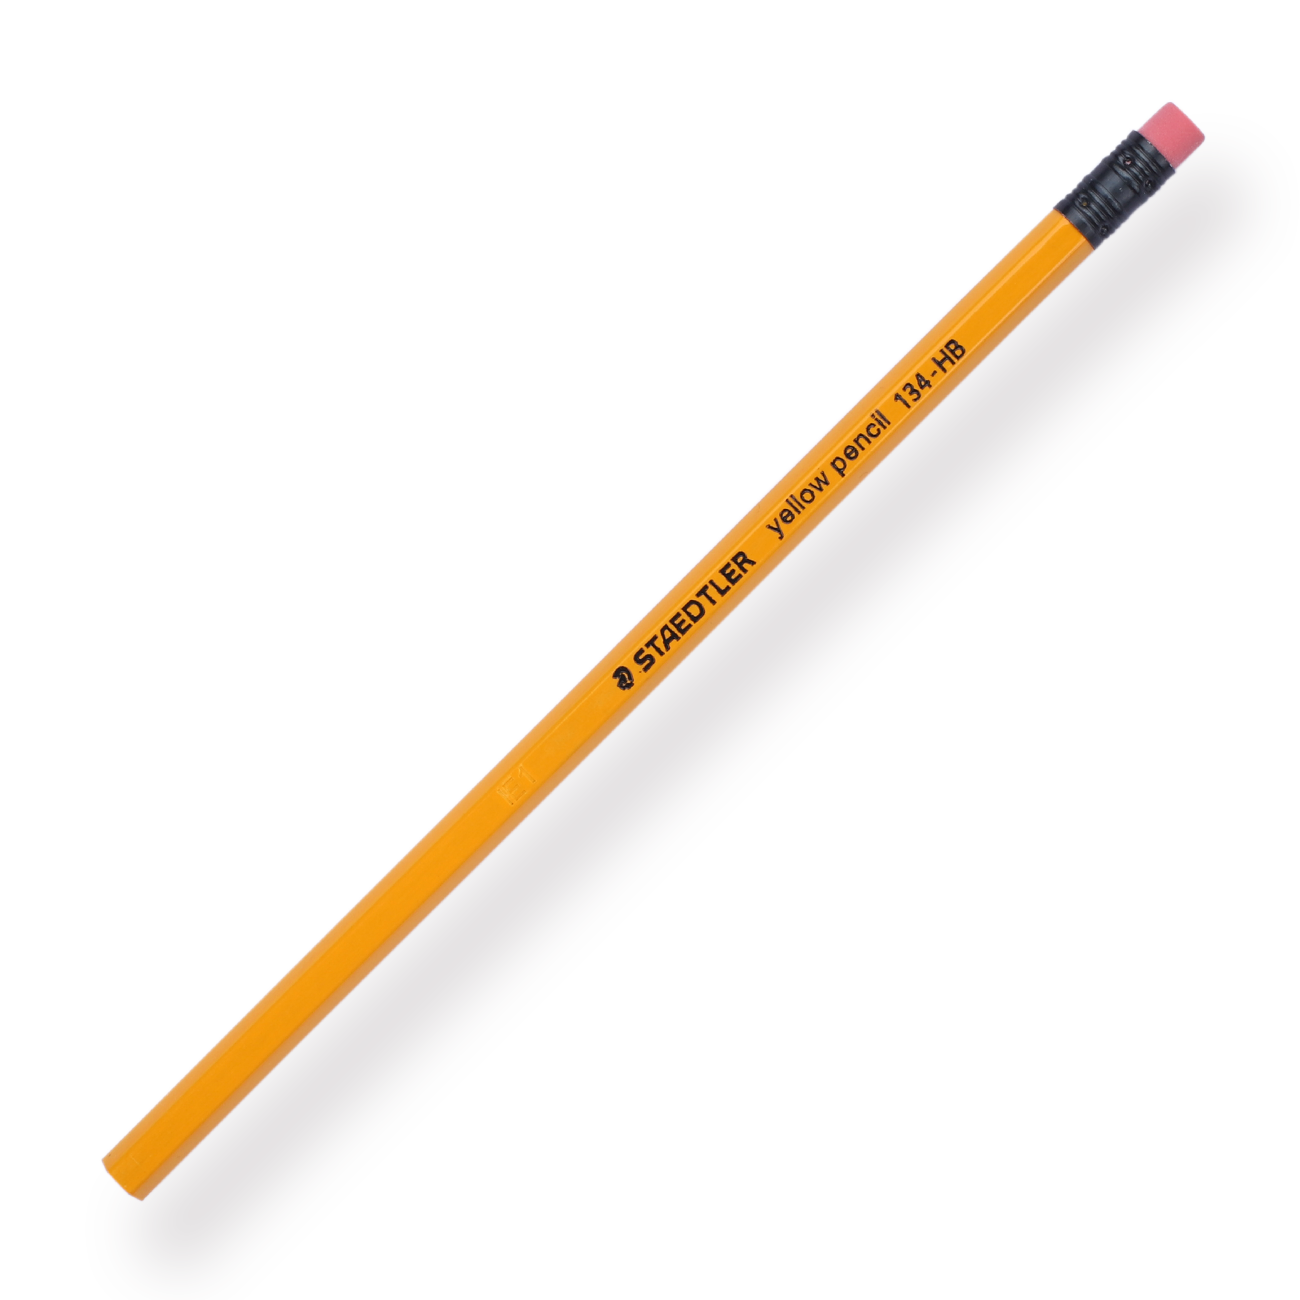 12 Pcs Staedtler 134 Pencil With Eraser Pencils School Stationery